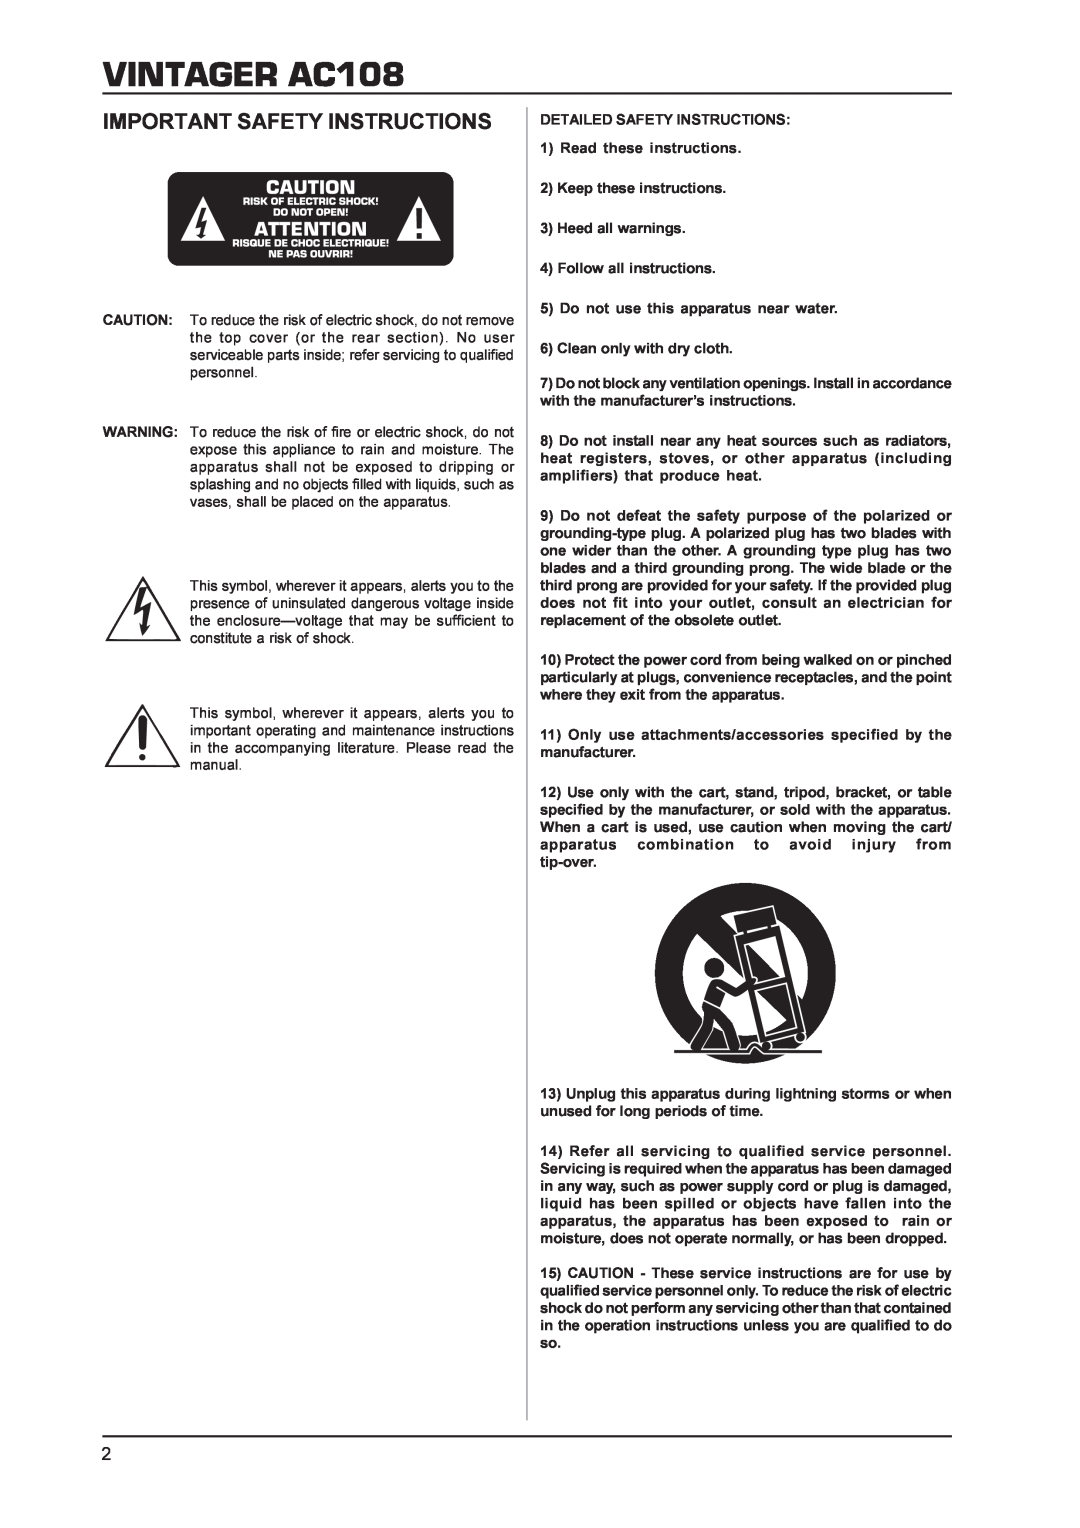 Behringer manual VINTAGER AC108, Important Safety Instructions 